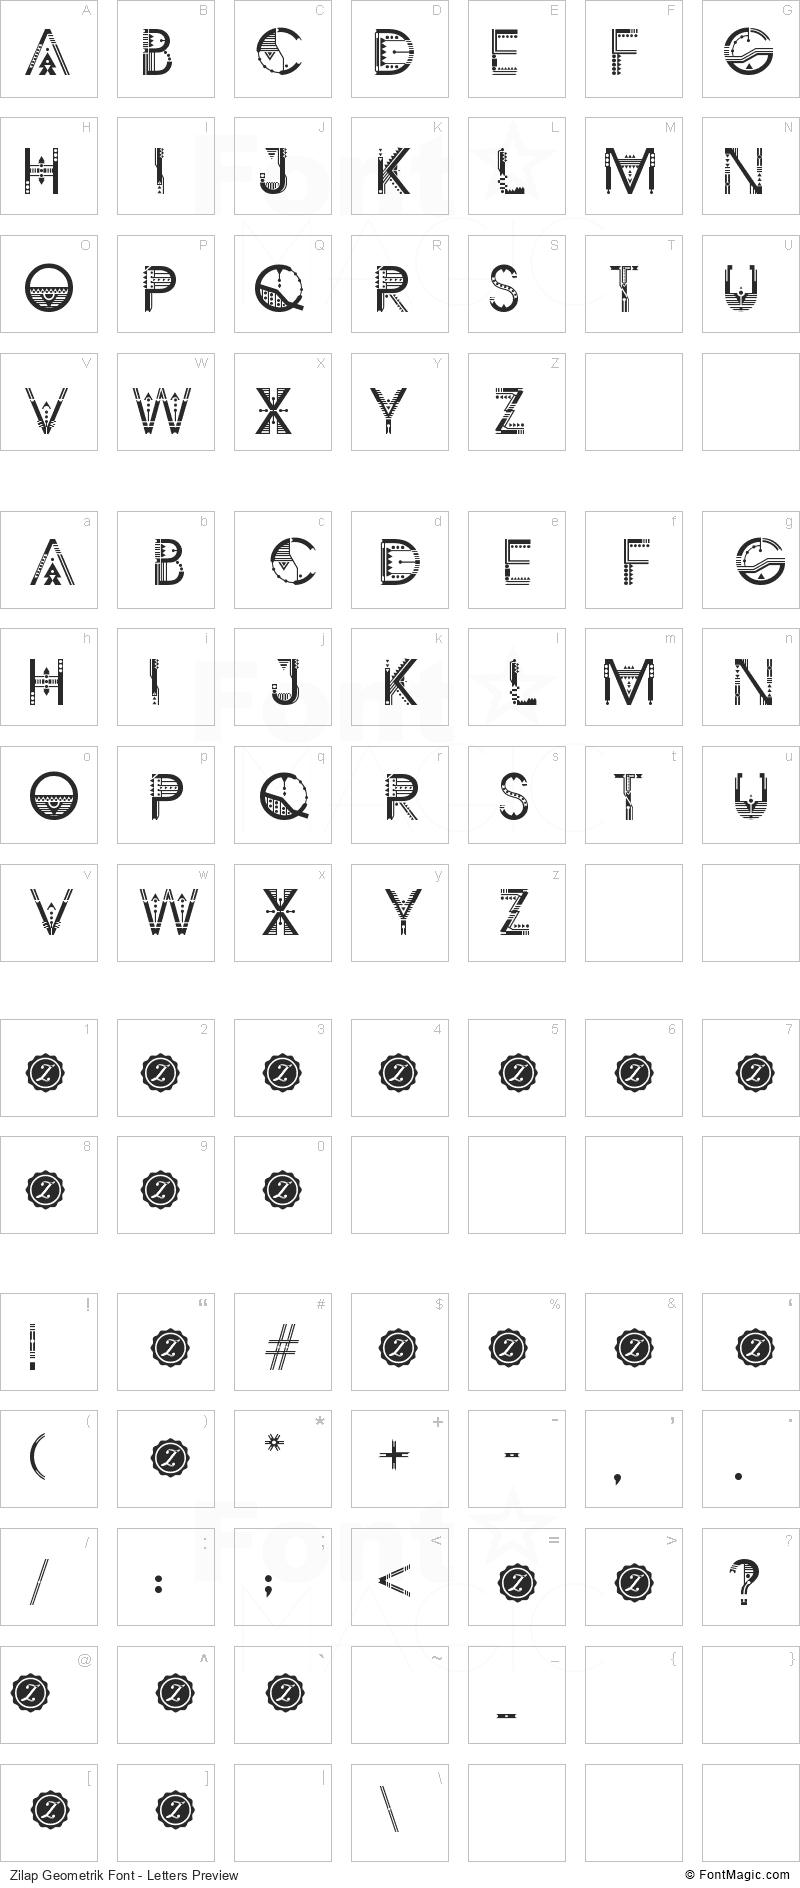 Zilap Geometrik Font - All Latters Preview Chart